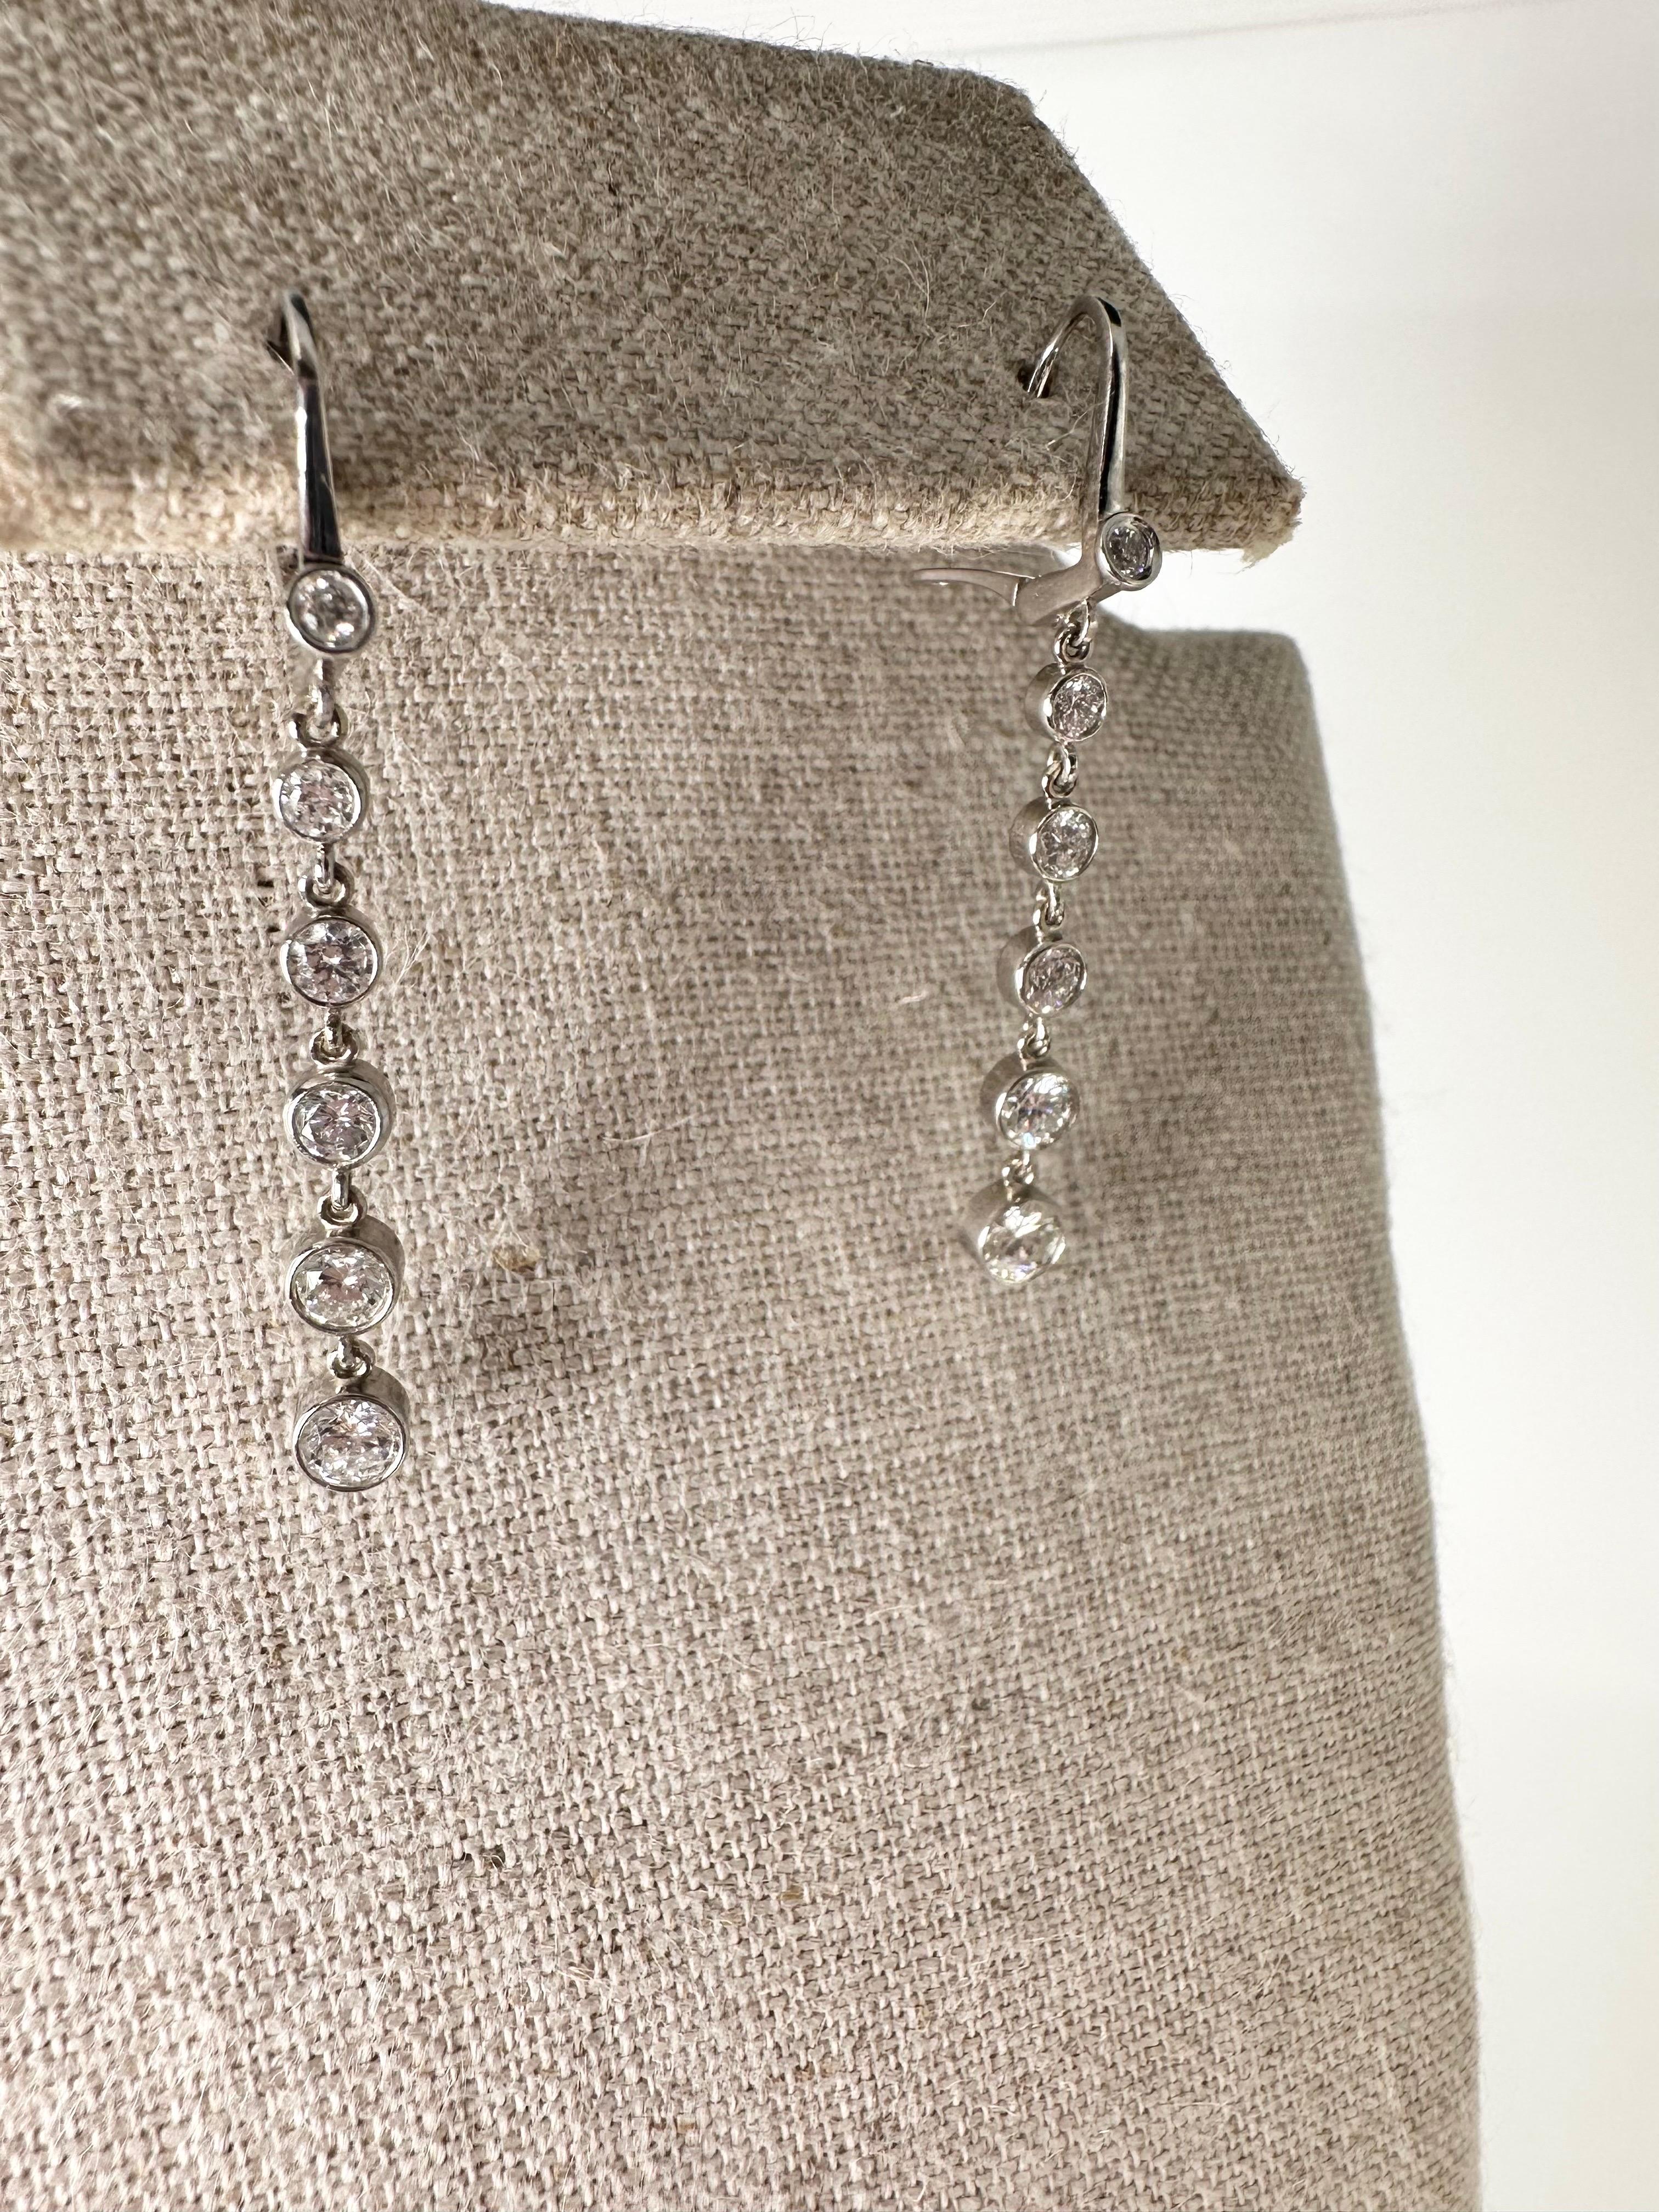 Diamond Earrings Long Dangling Earrings 1.26ct Natural VS Diamond Earrings 14kt  In New Condition For Sale In Jupiter, FL